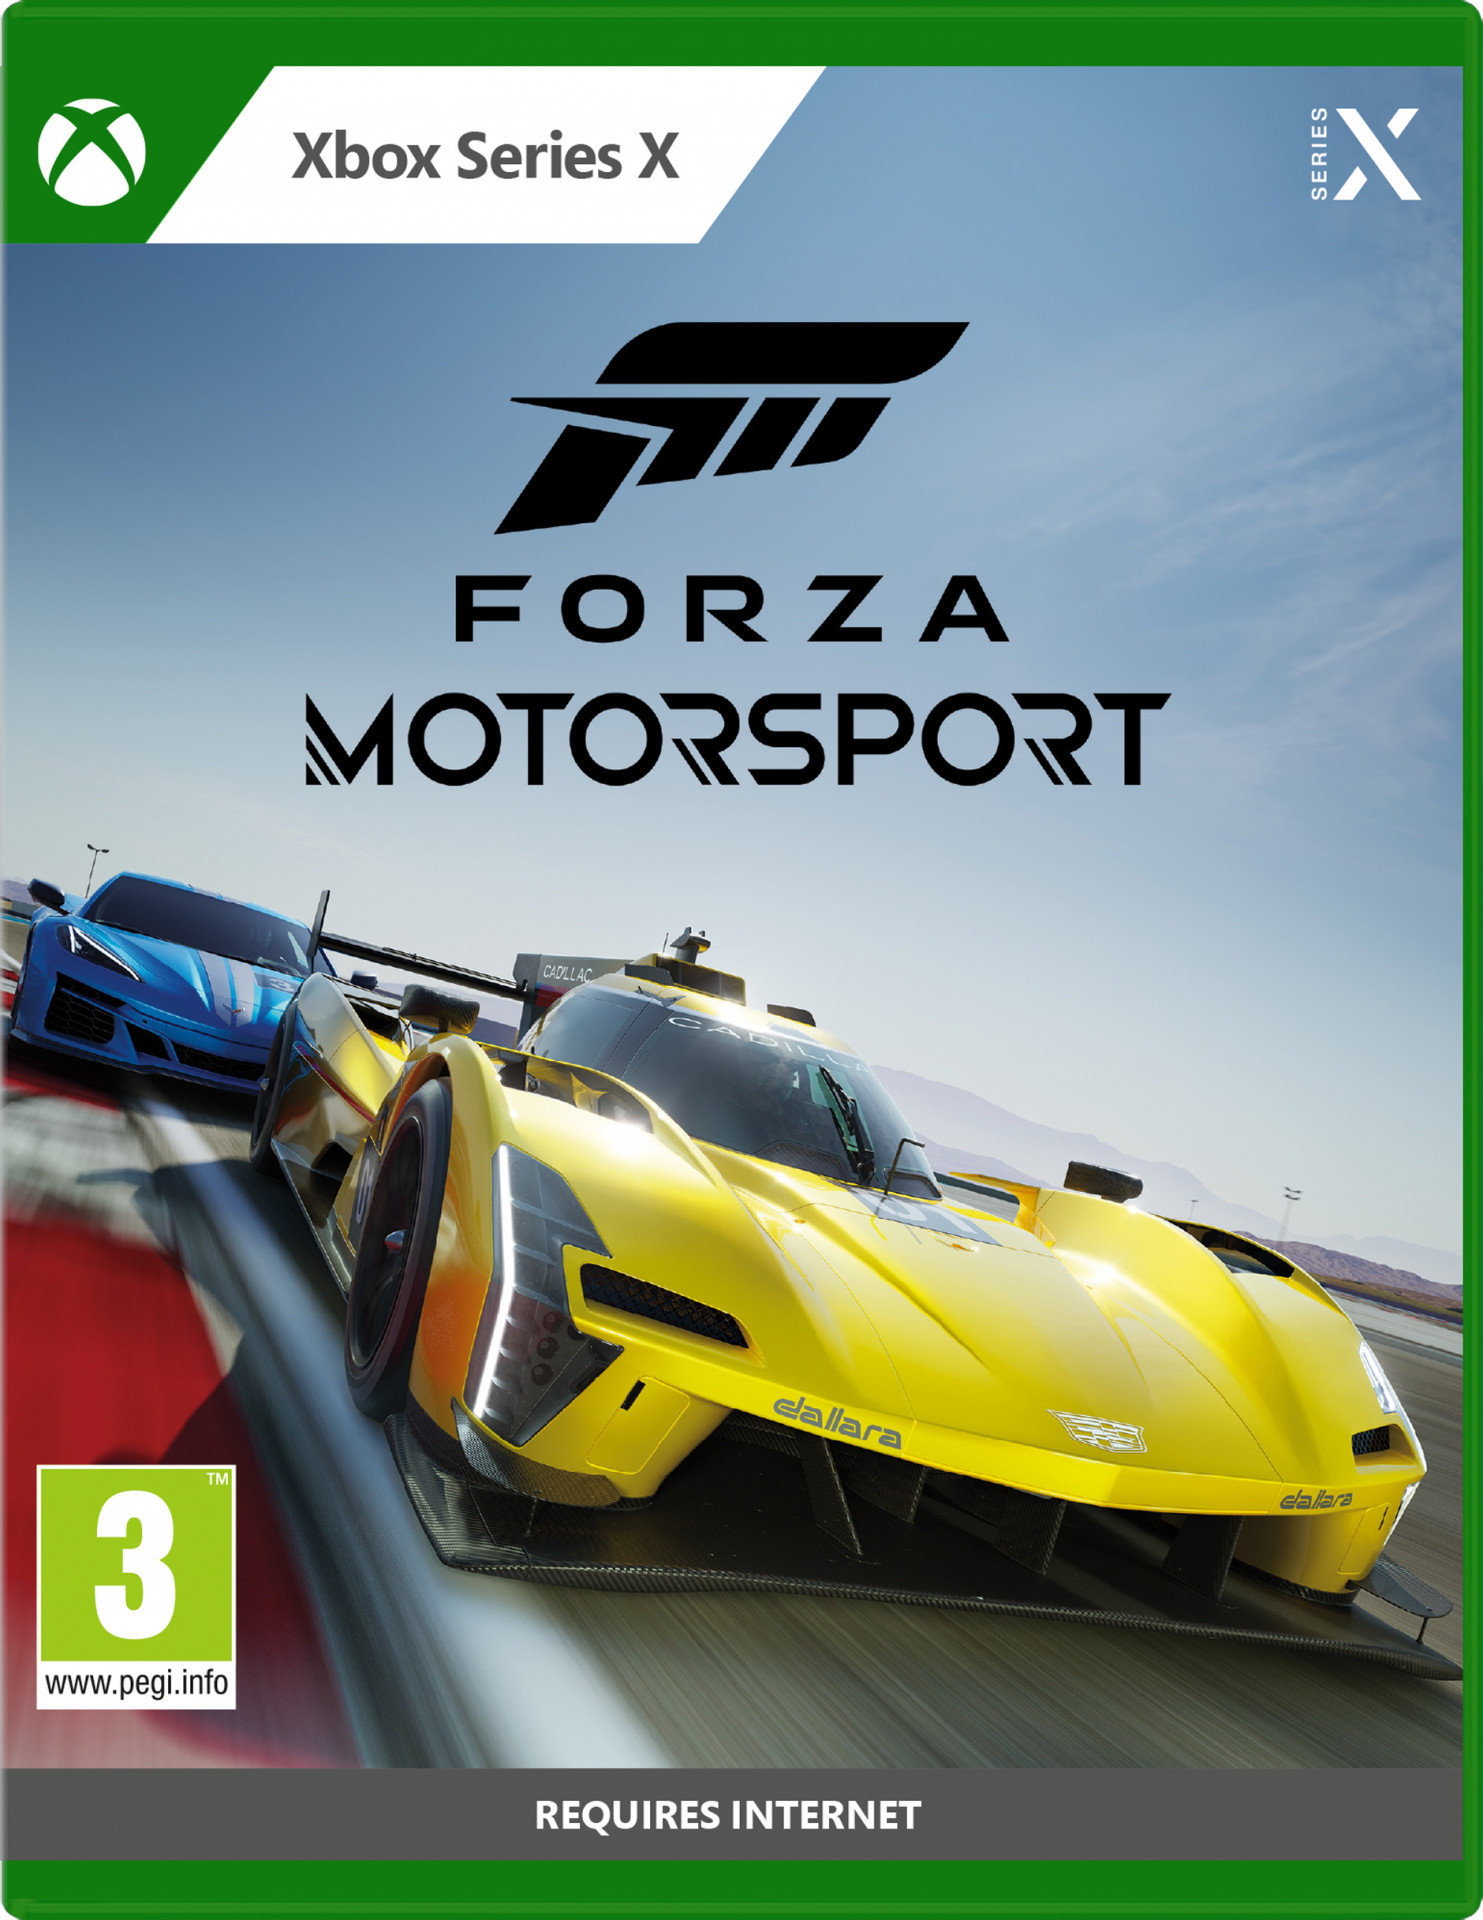 xboxgamestudios Forza Motorsport - Microsoft Xbox Series X - Rennspiel - PEGI 3